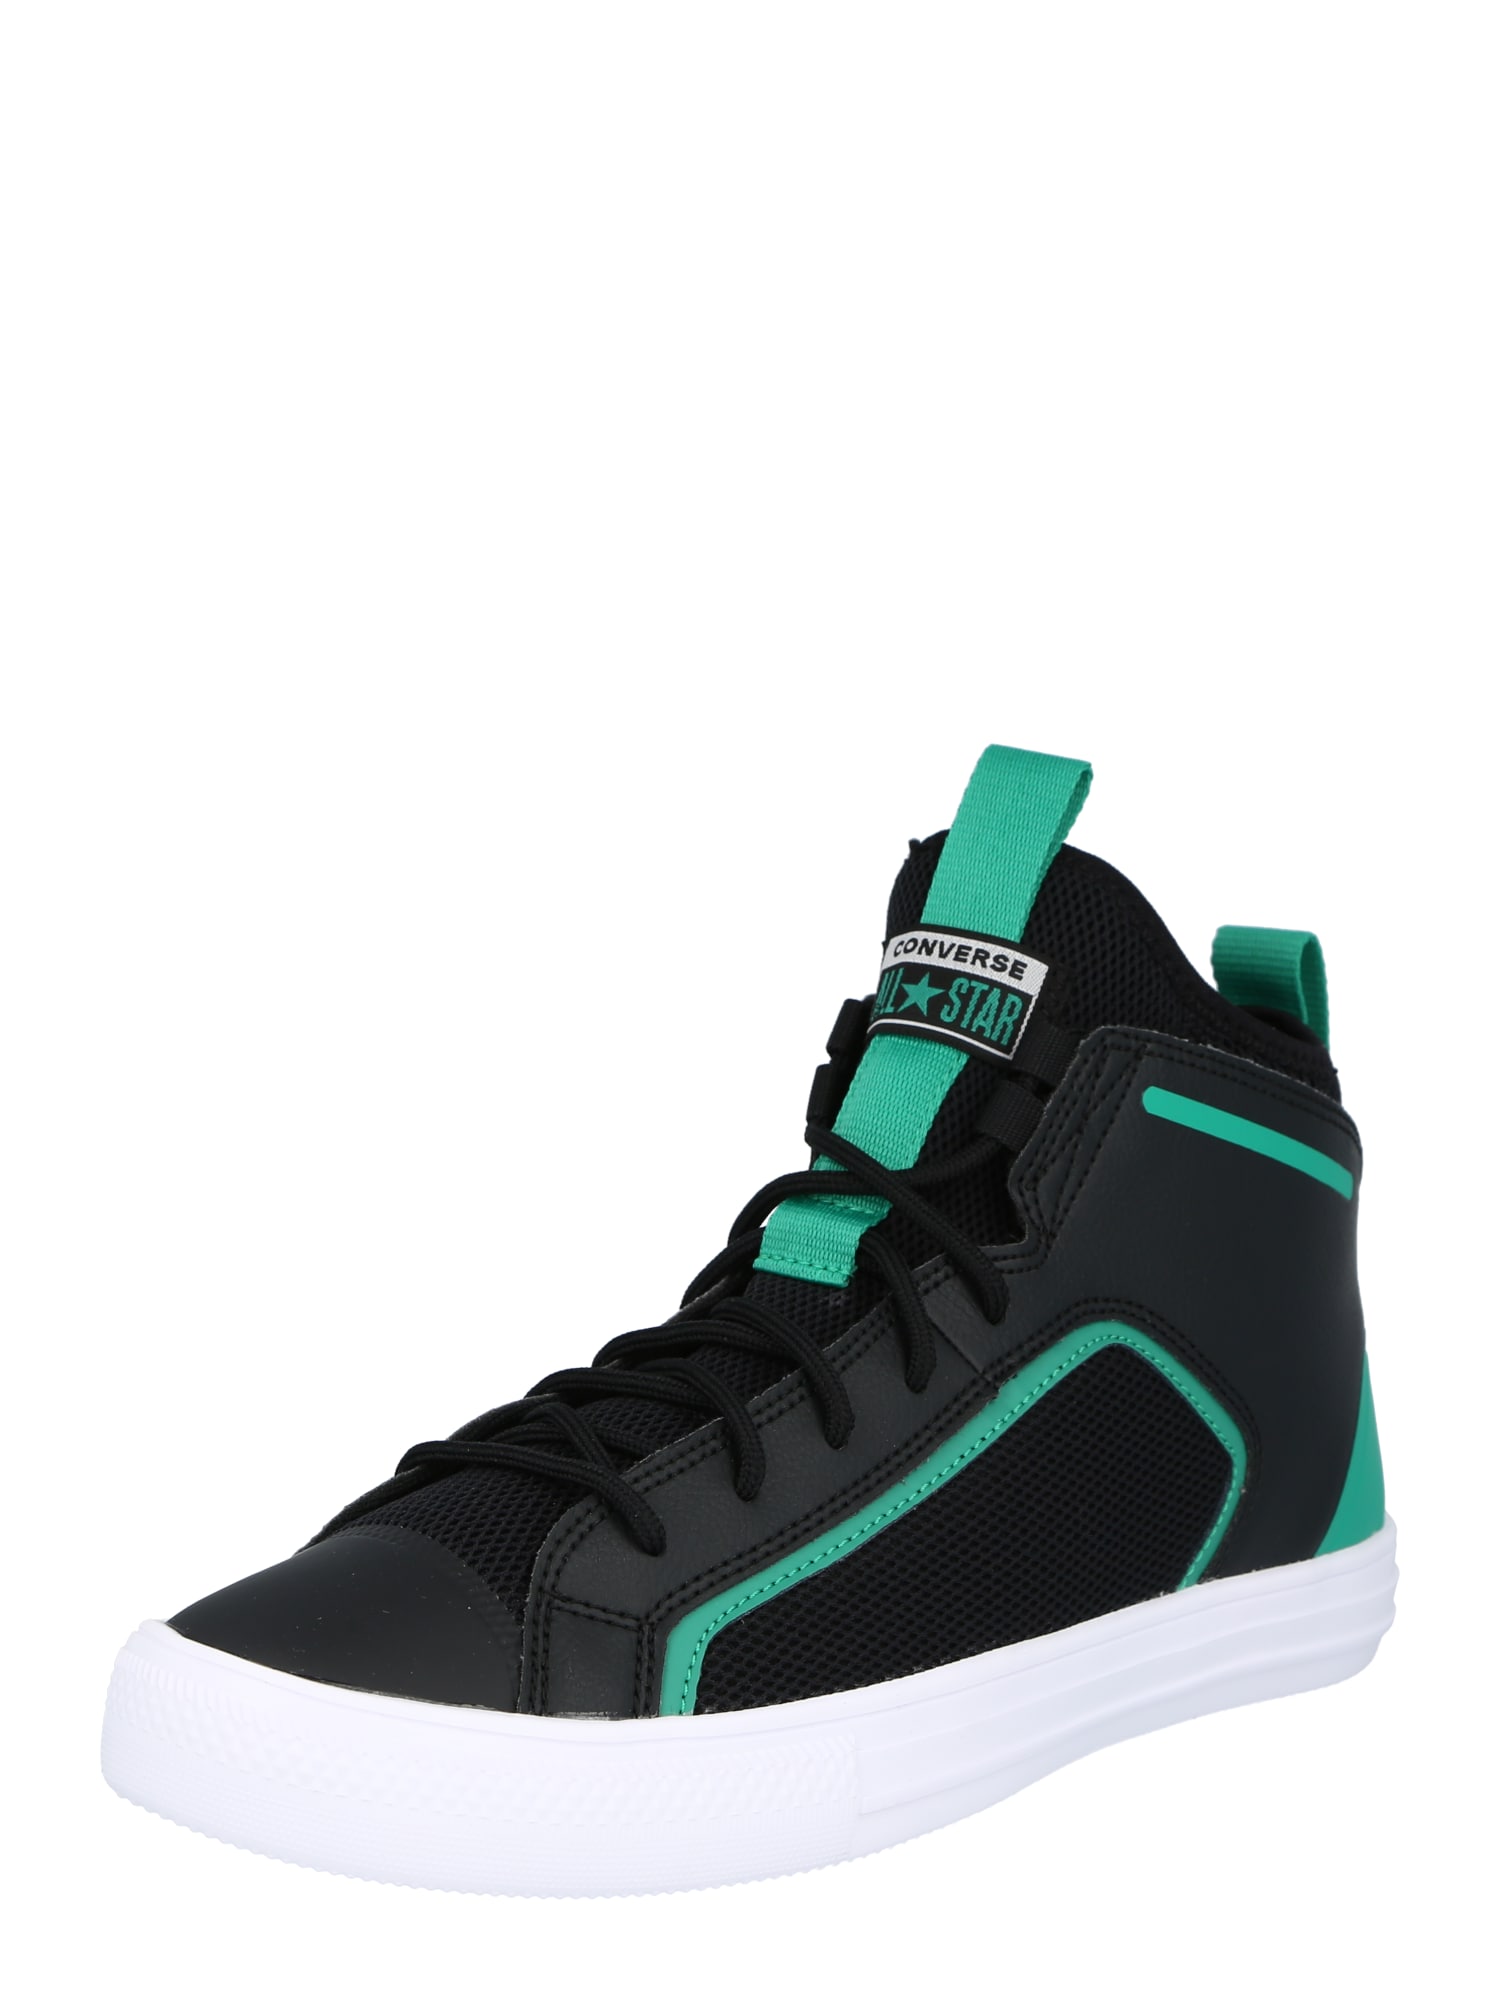 Converse CONVERSE Sneaker 'Chuck Tailor All Star' grün / schwarz